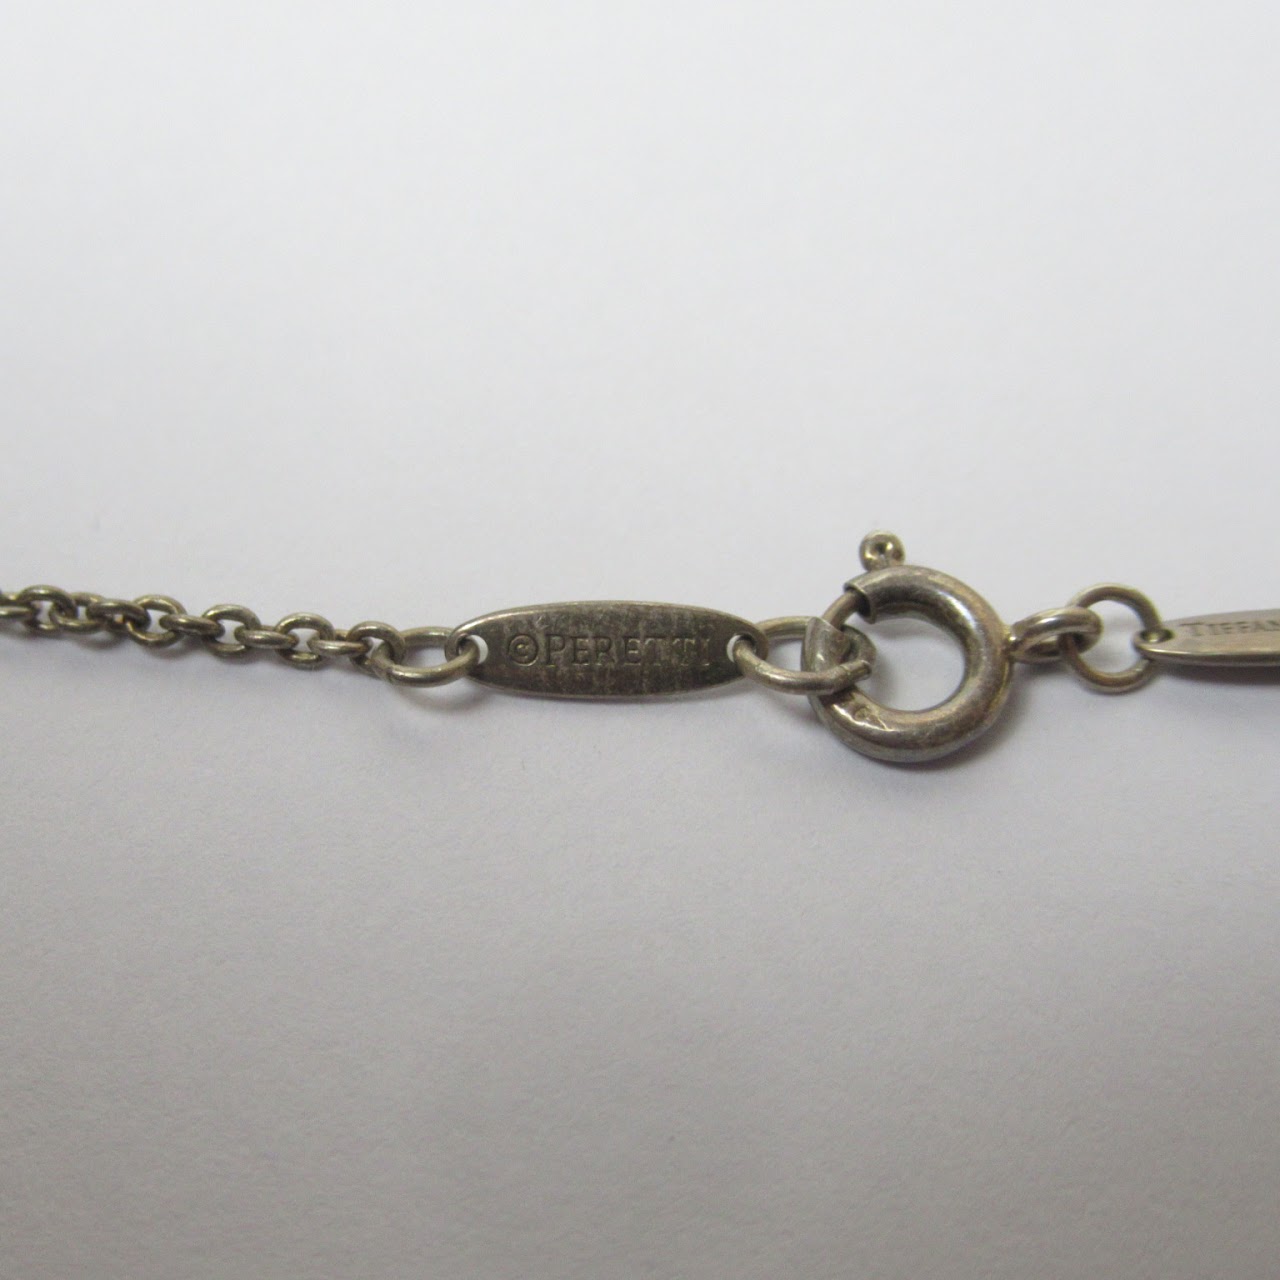 Tiffany & Co. Elsa Peretti Sterling Silver Teardrop Charm Necklace